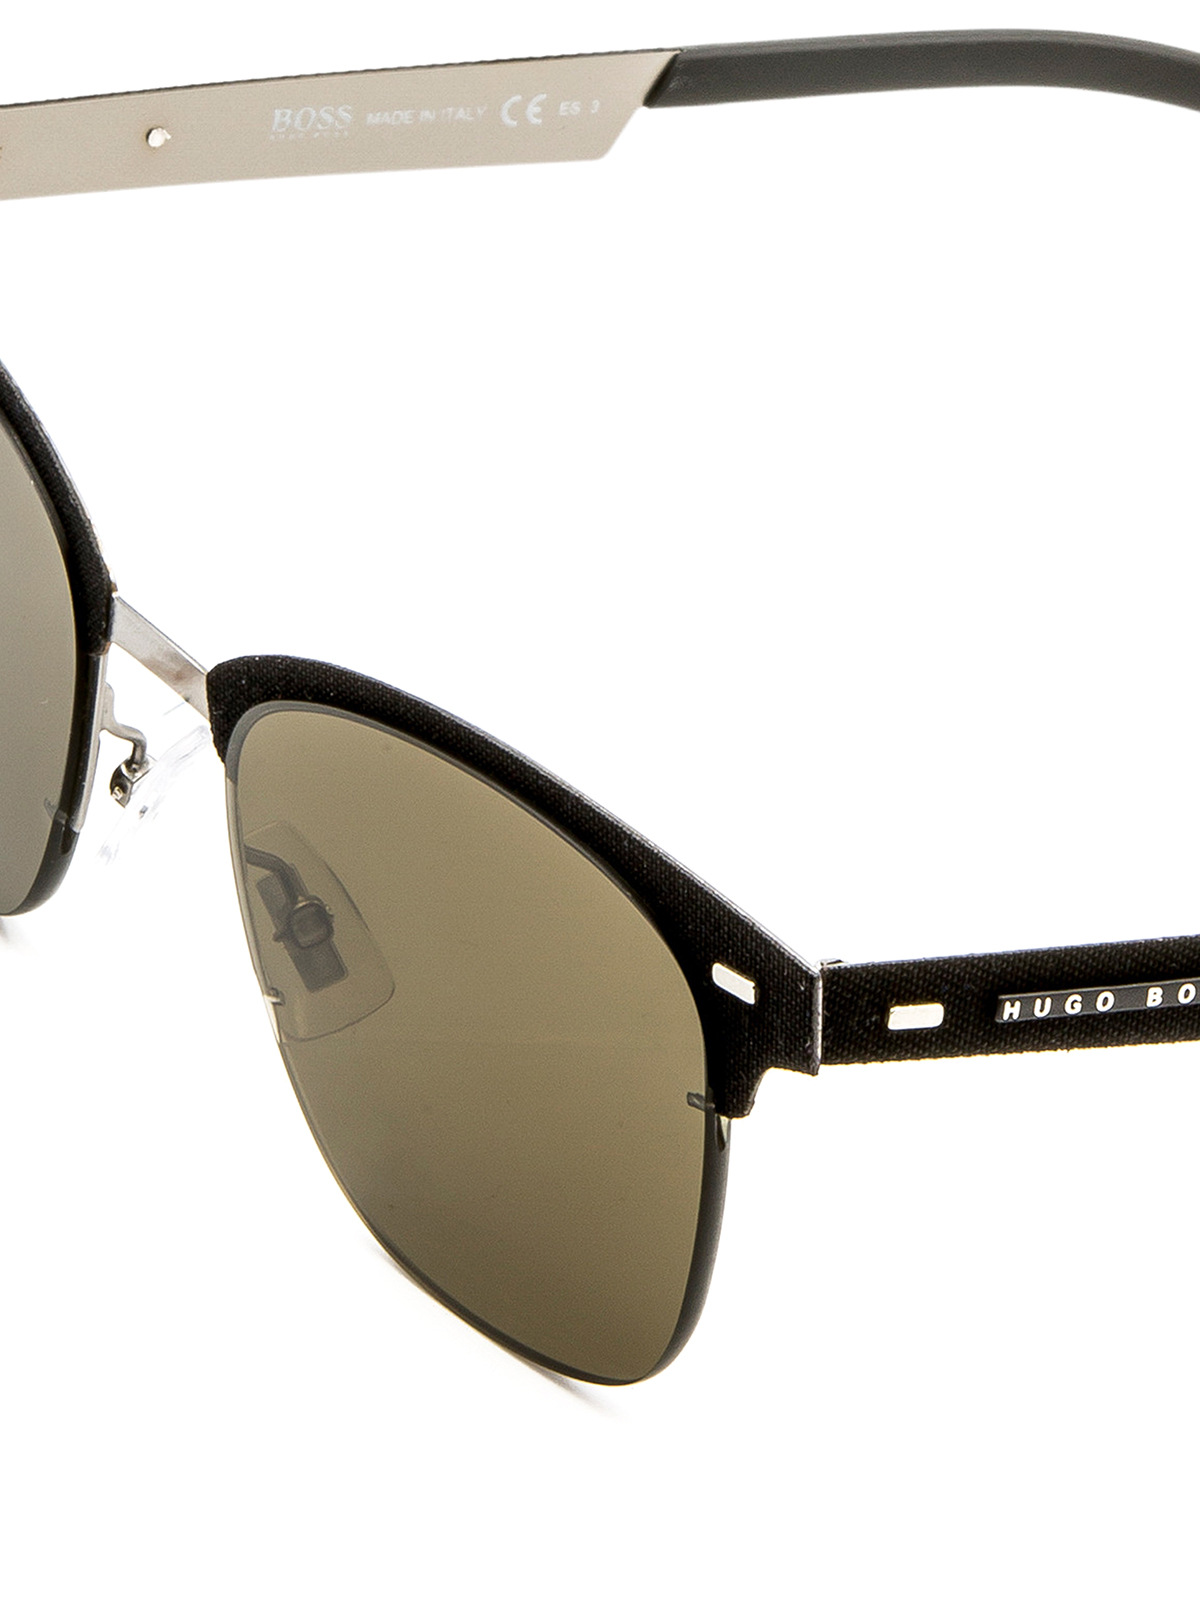 Sunglasses Hugo Boss - Black metal and fabric sunglasses ...